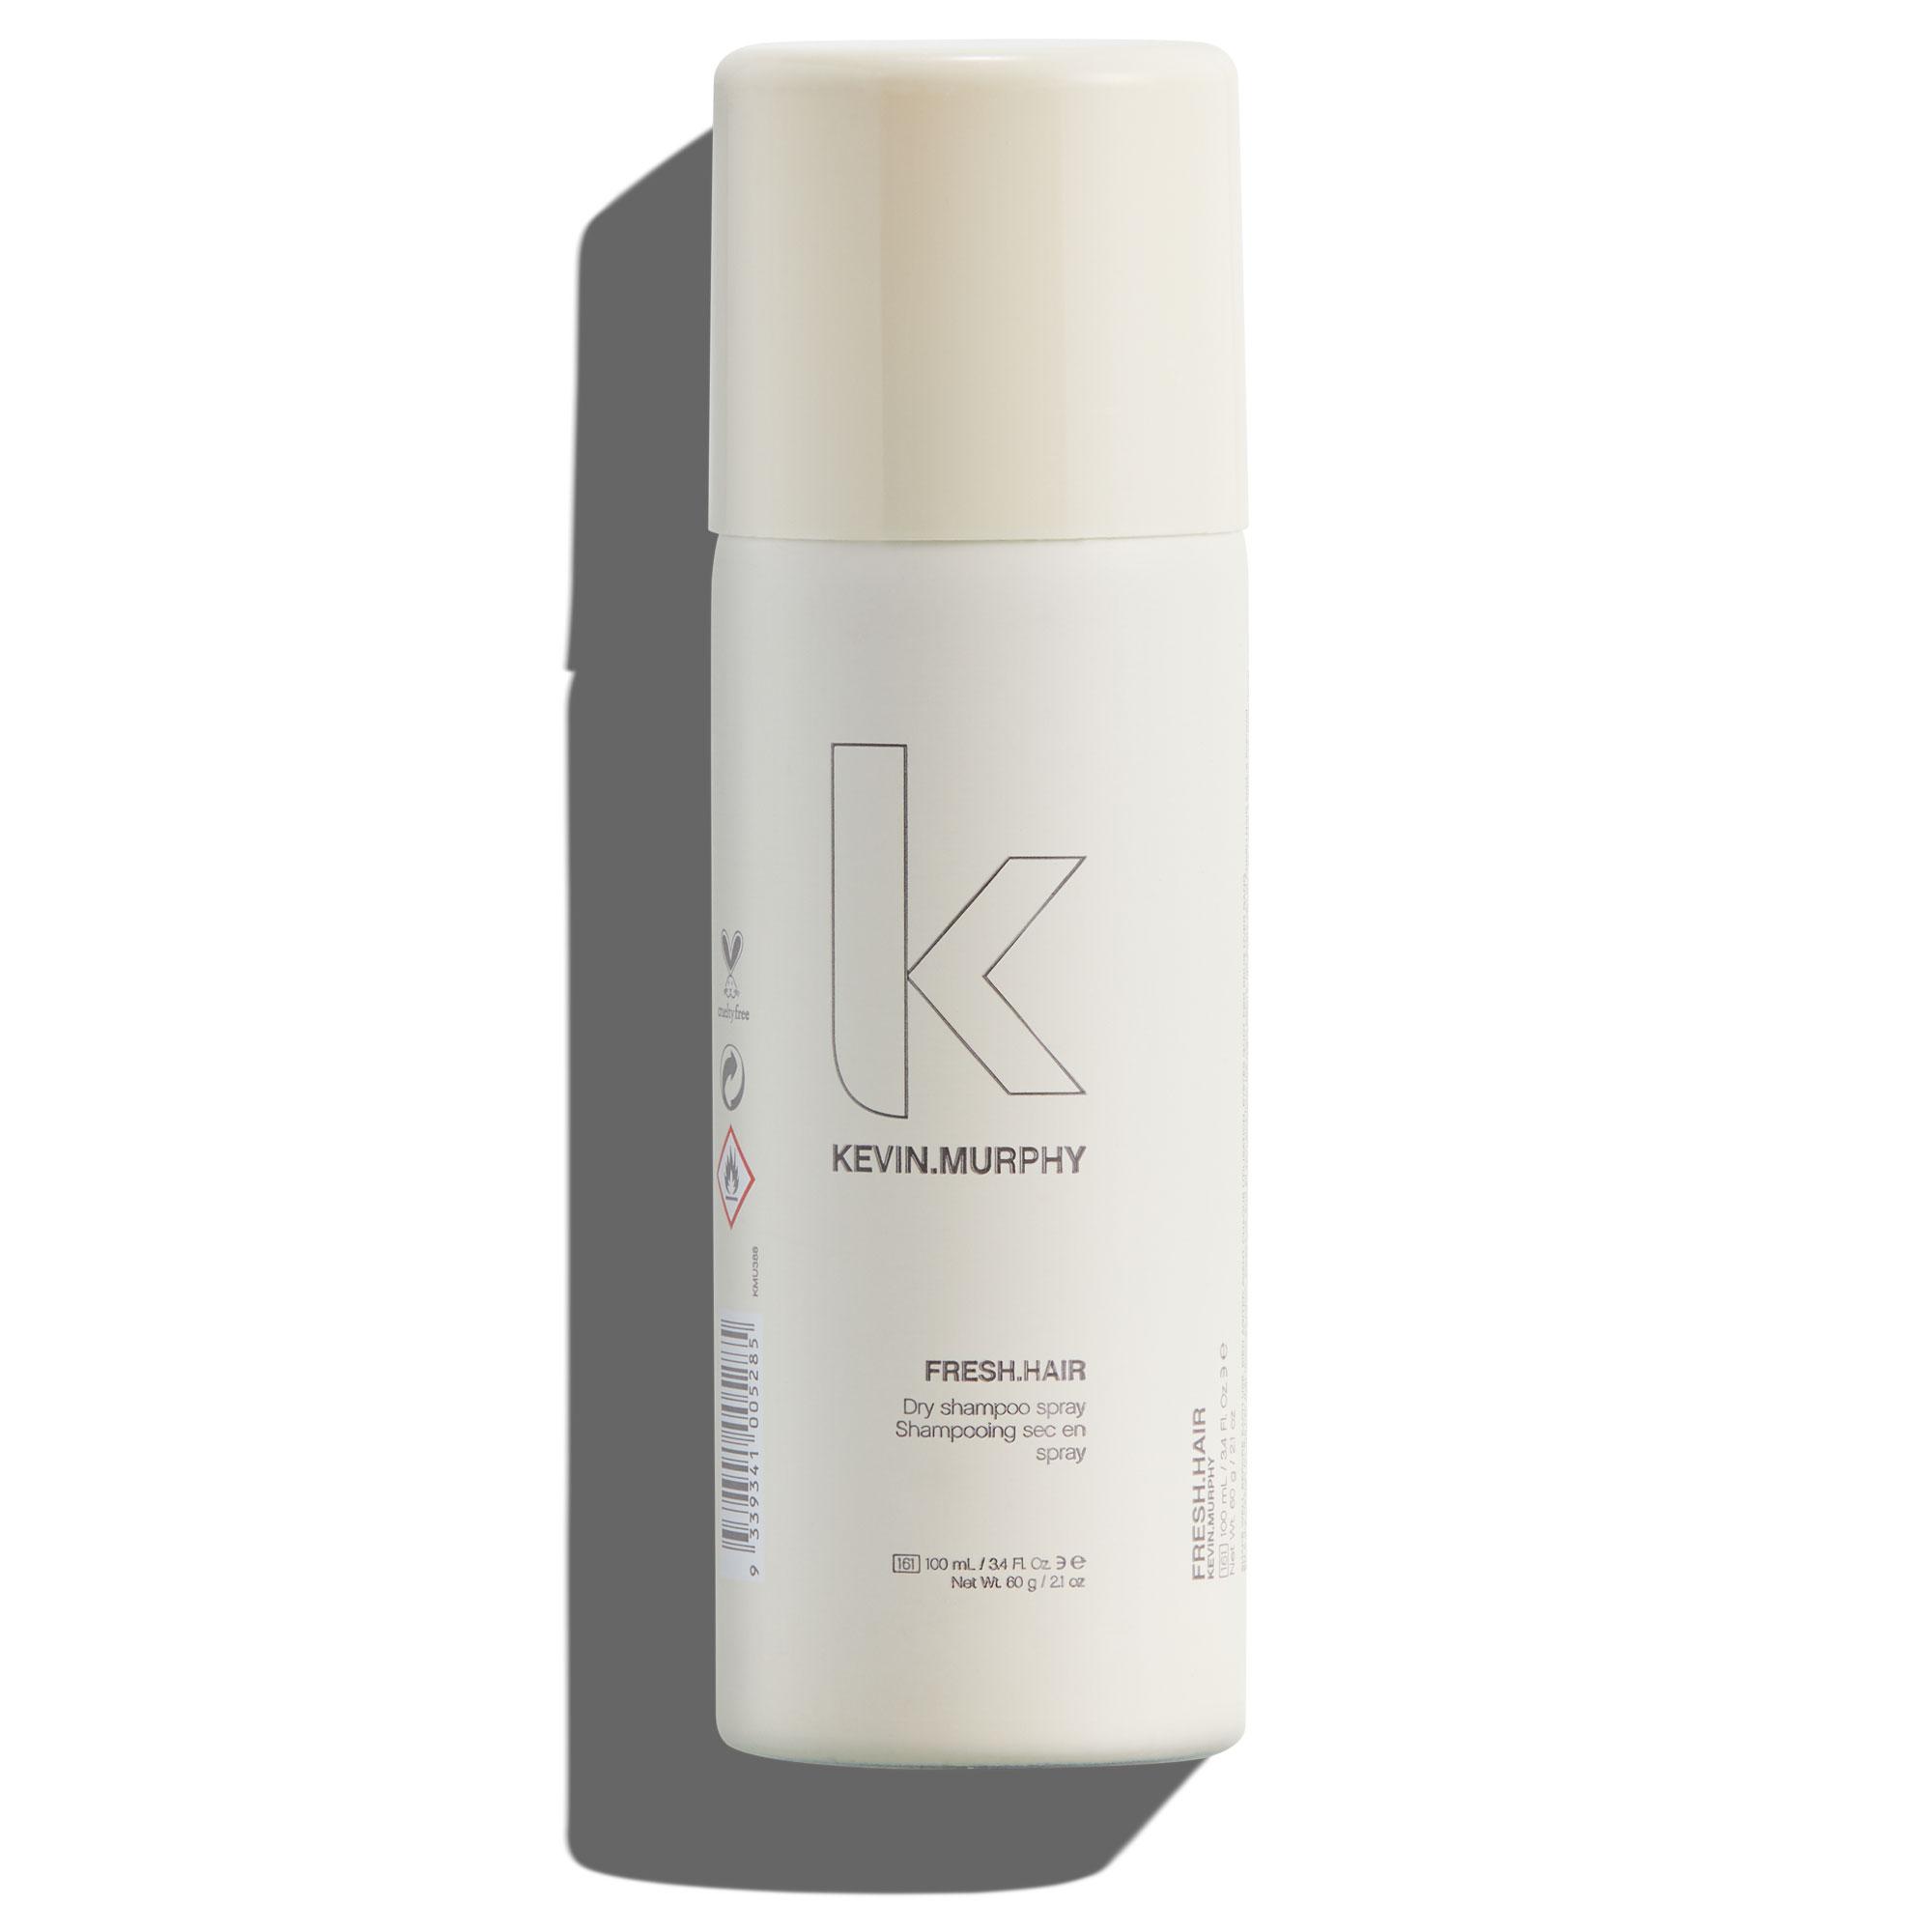 KEVIN.MURPHY FRESH.HAIR Dry Shampoo 6.7oz